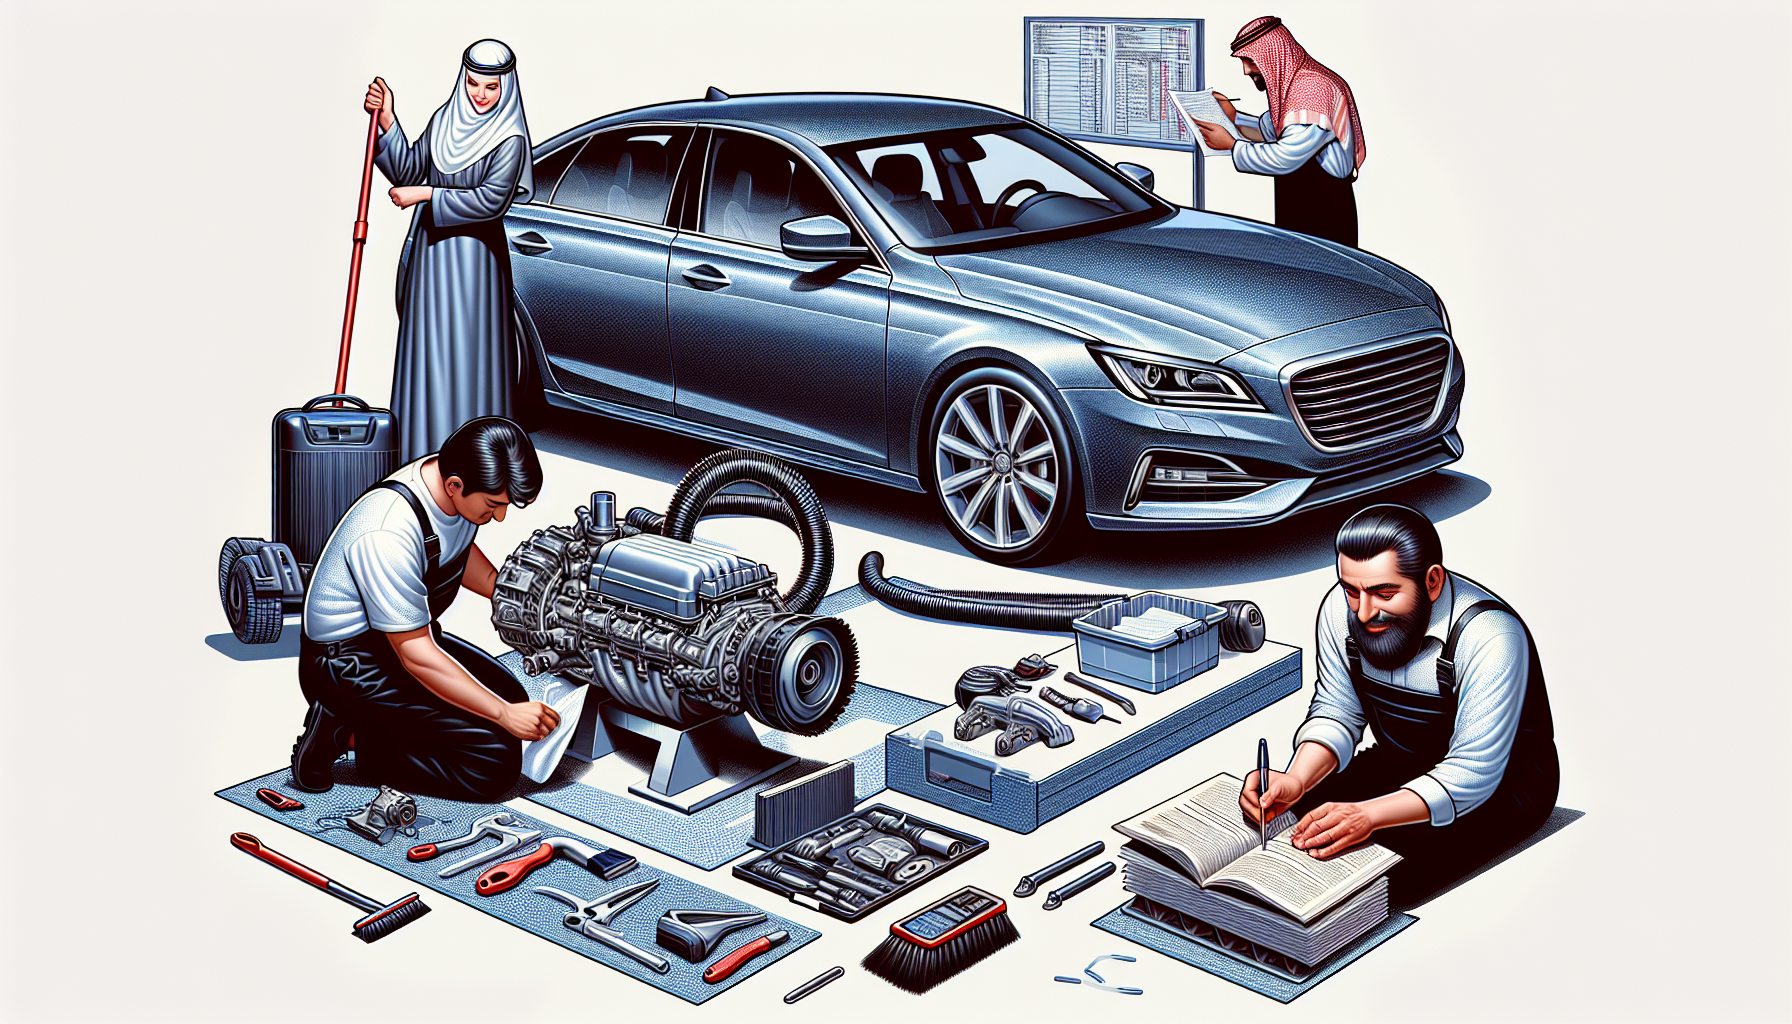 Illustration of preparing a car for sale